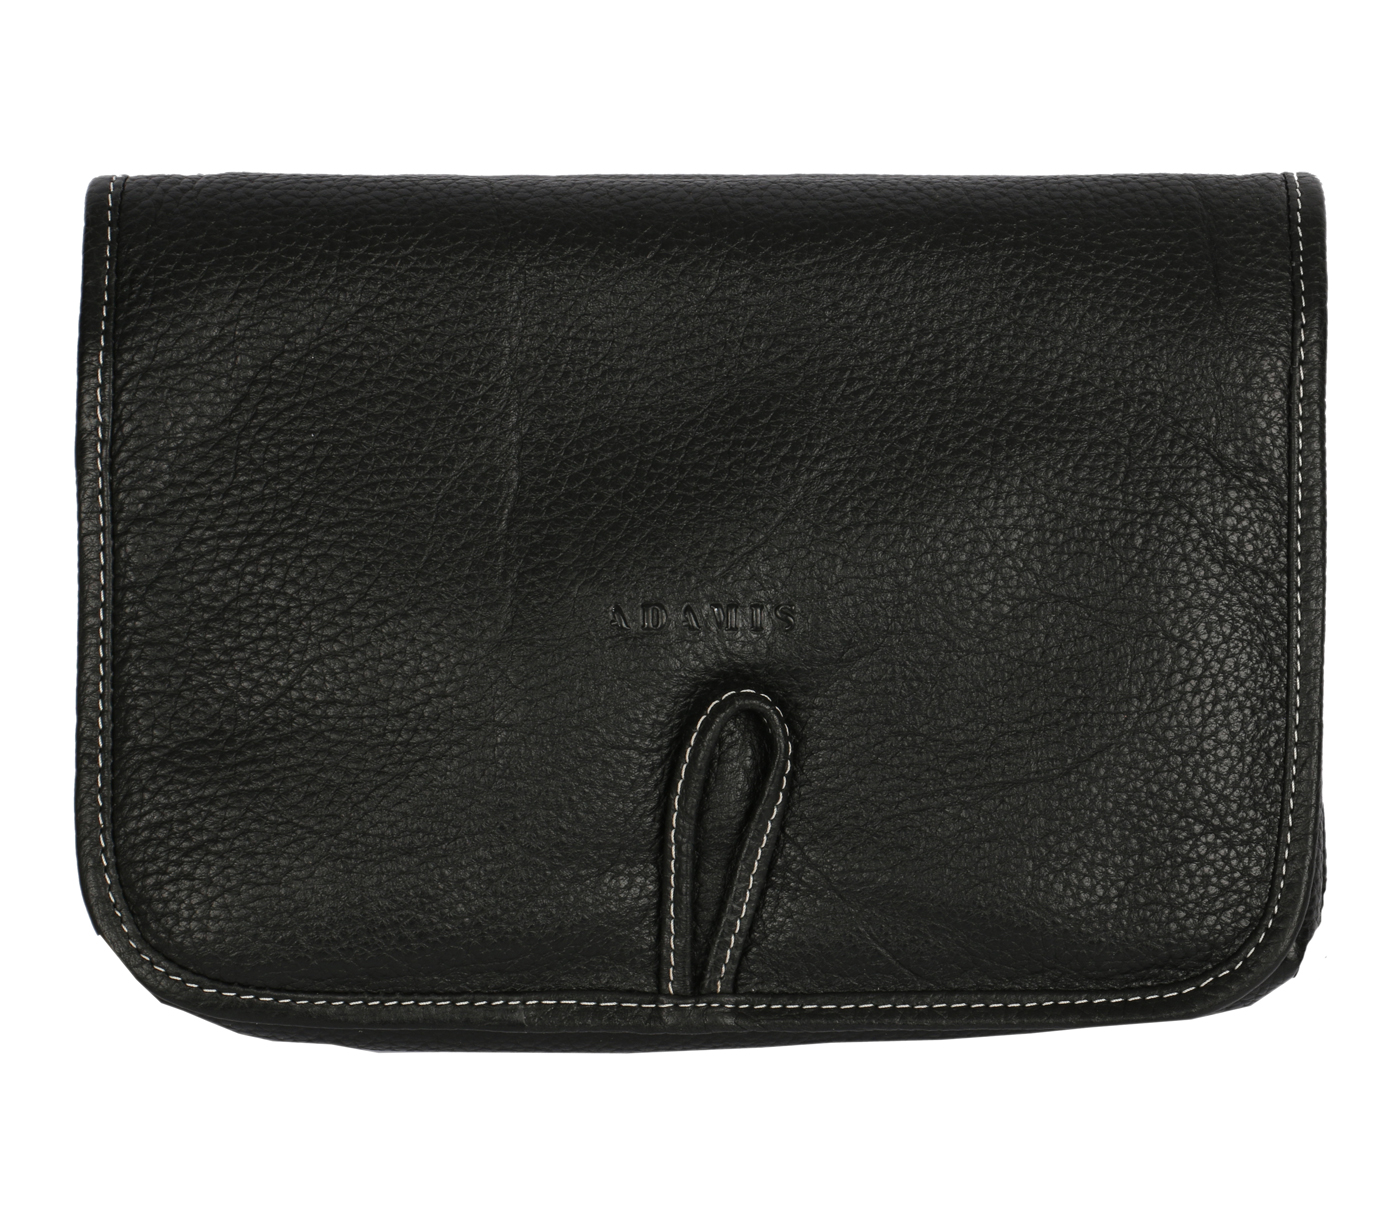  Leather Travel Essential(Black)SC12